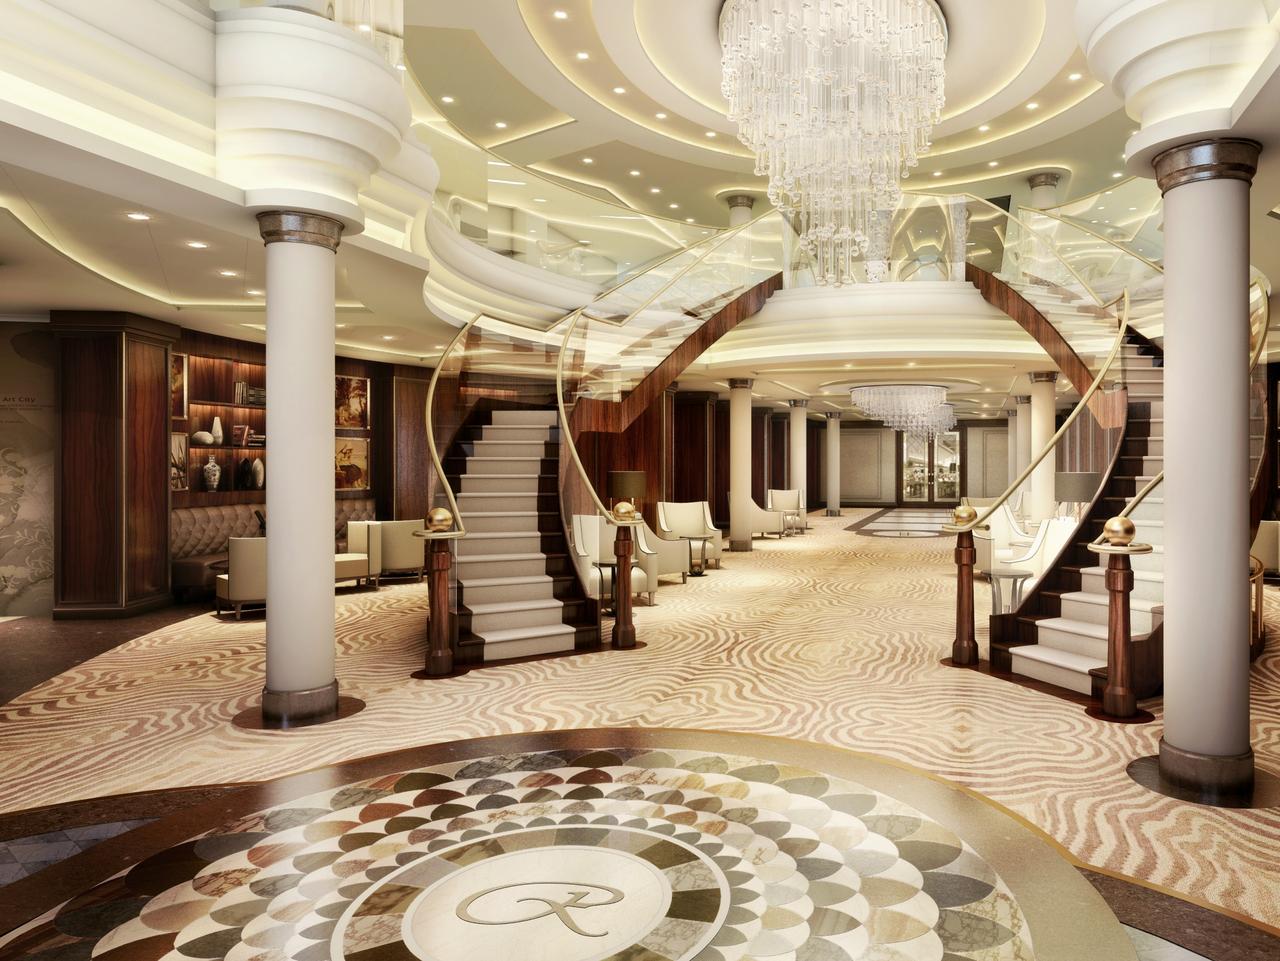 regent explorer most luxurious cruise ship ever